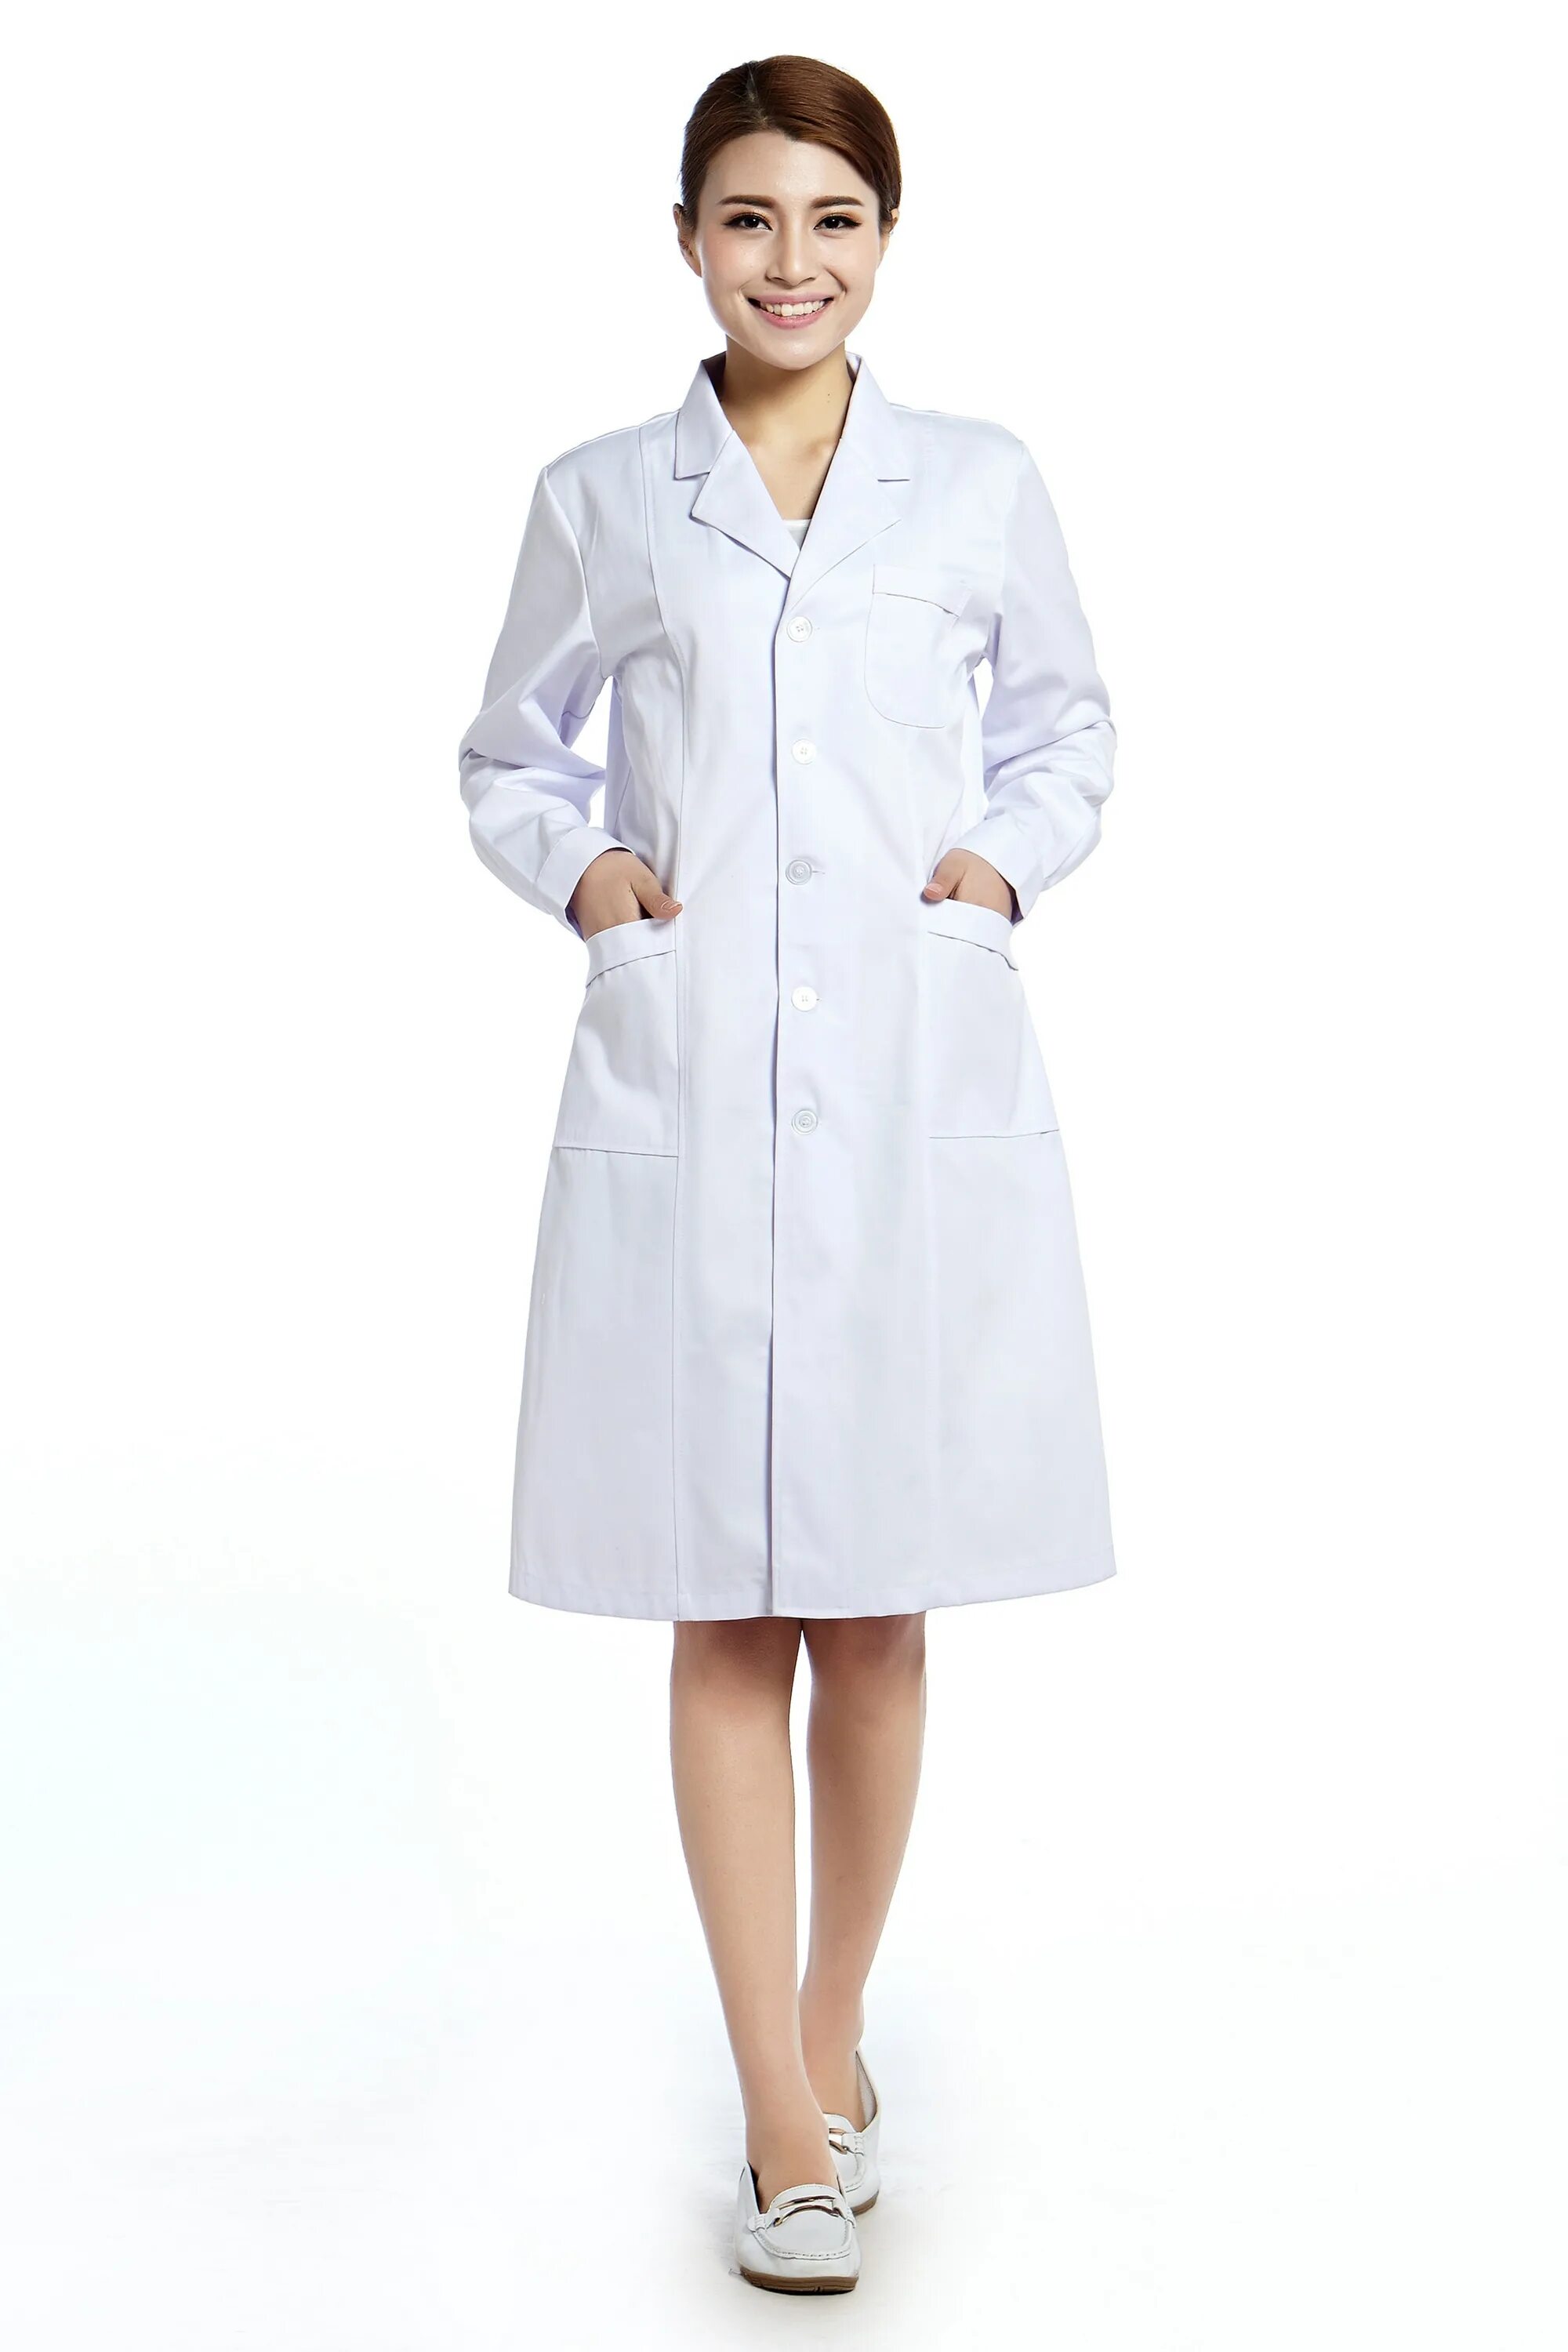 Wear Plus лабораторный халат Nelson. Белый лабораторный халат. Одежда врача. Халат медицинский белый. Купленных халат аптека